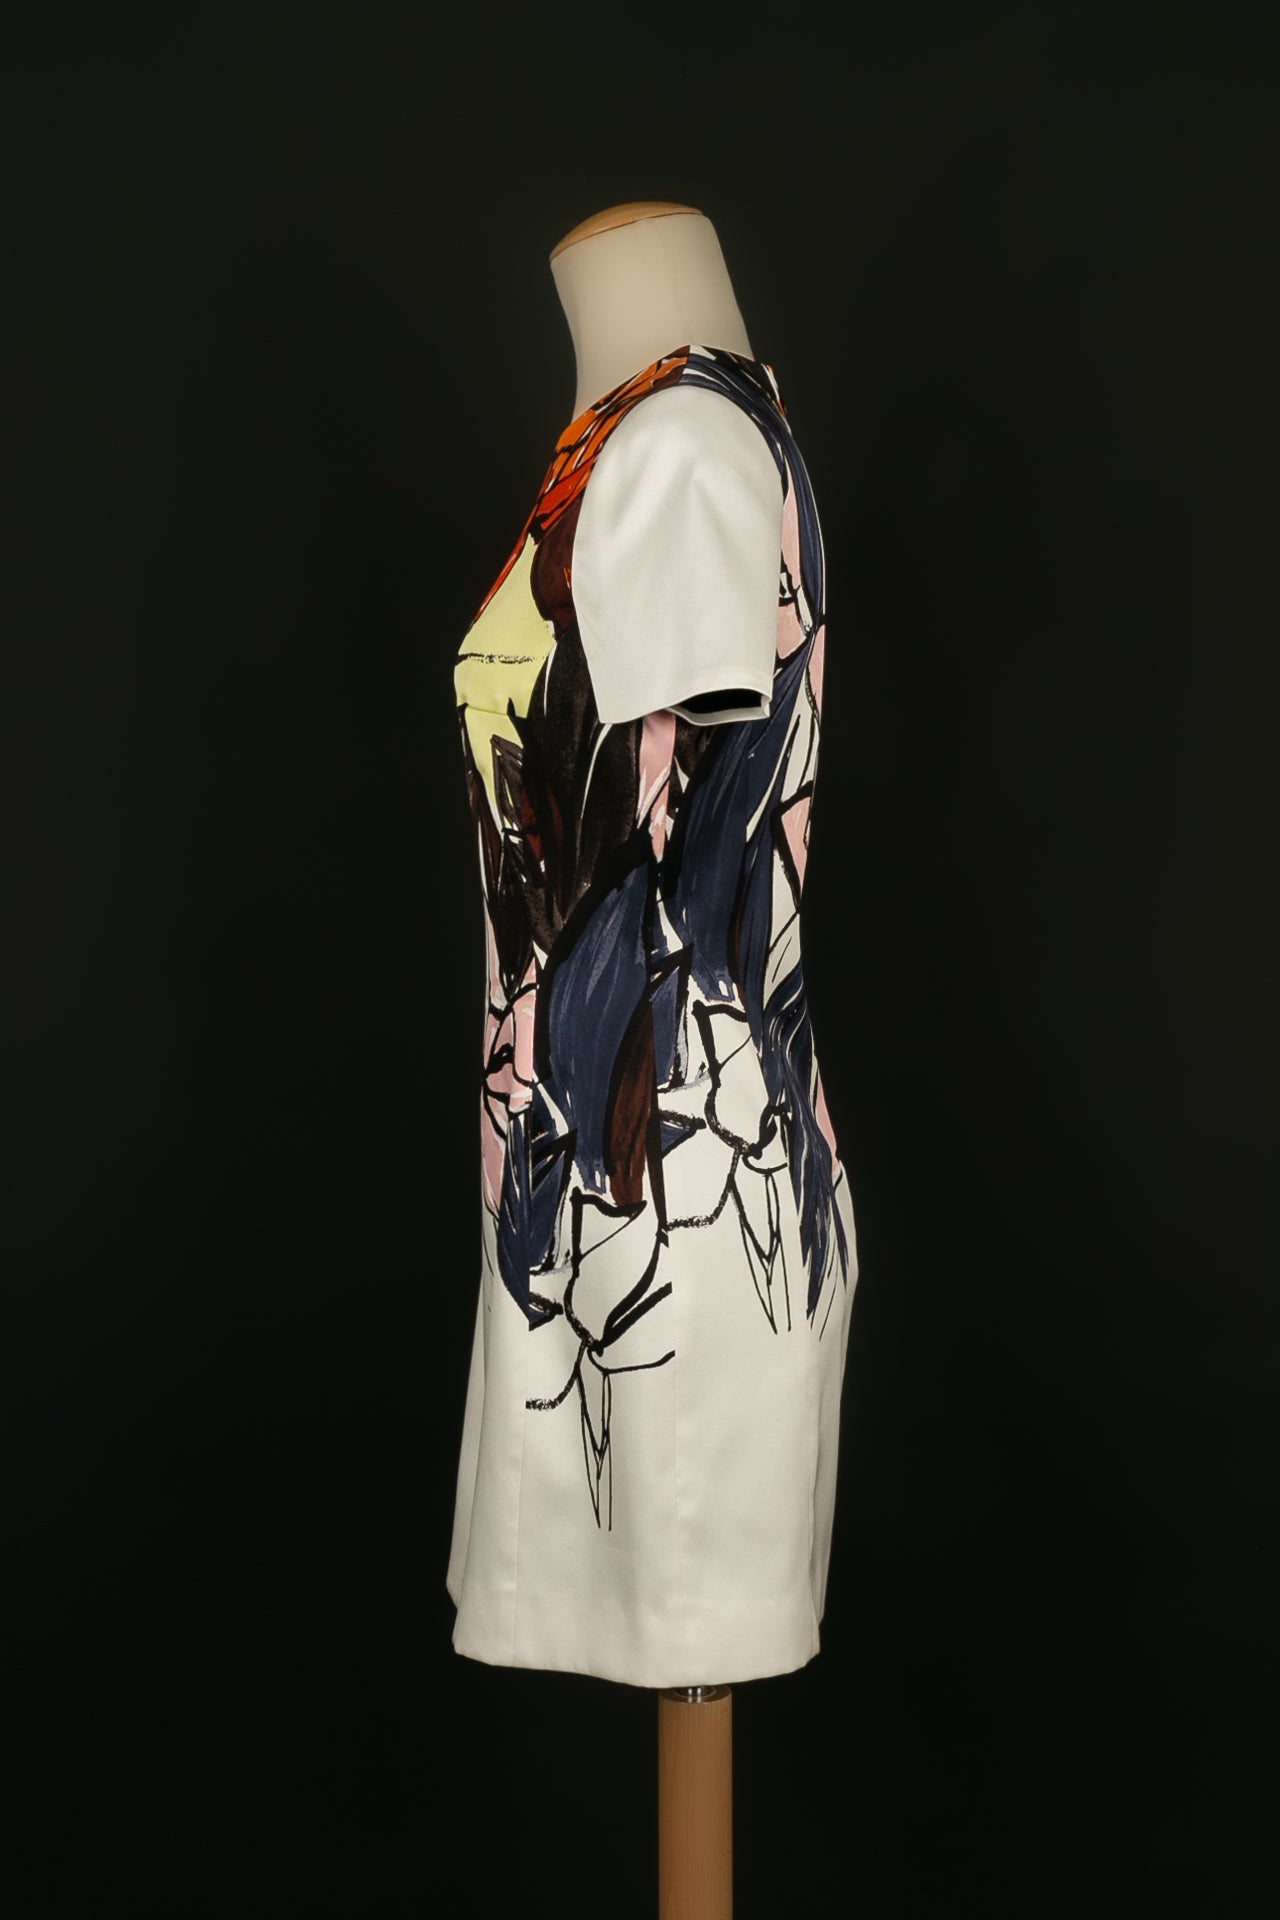 Robe Christian Dior 2015